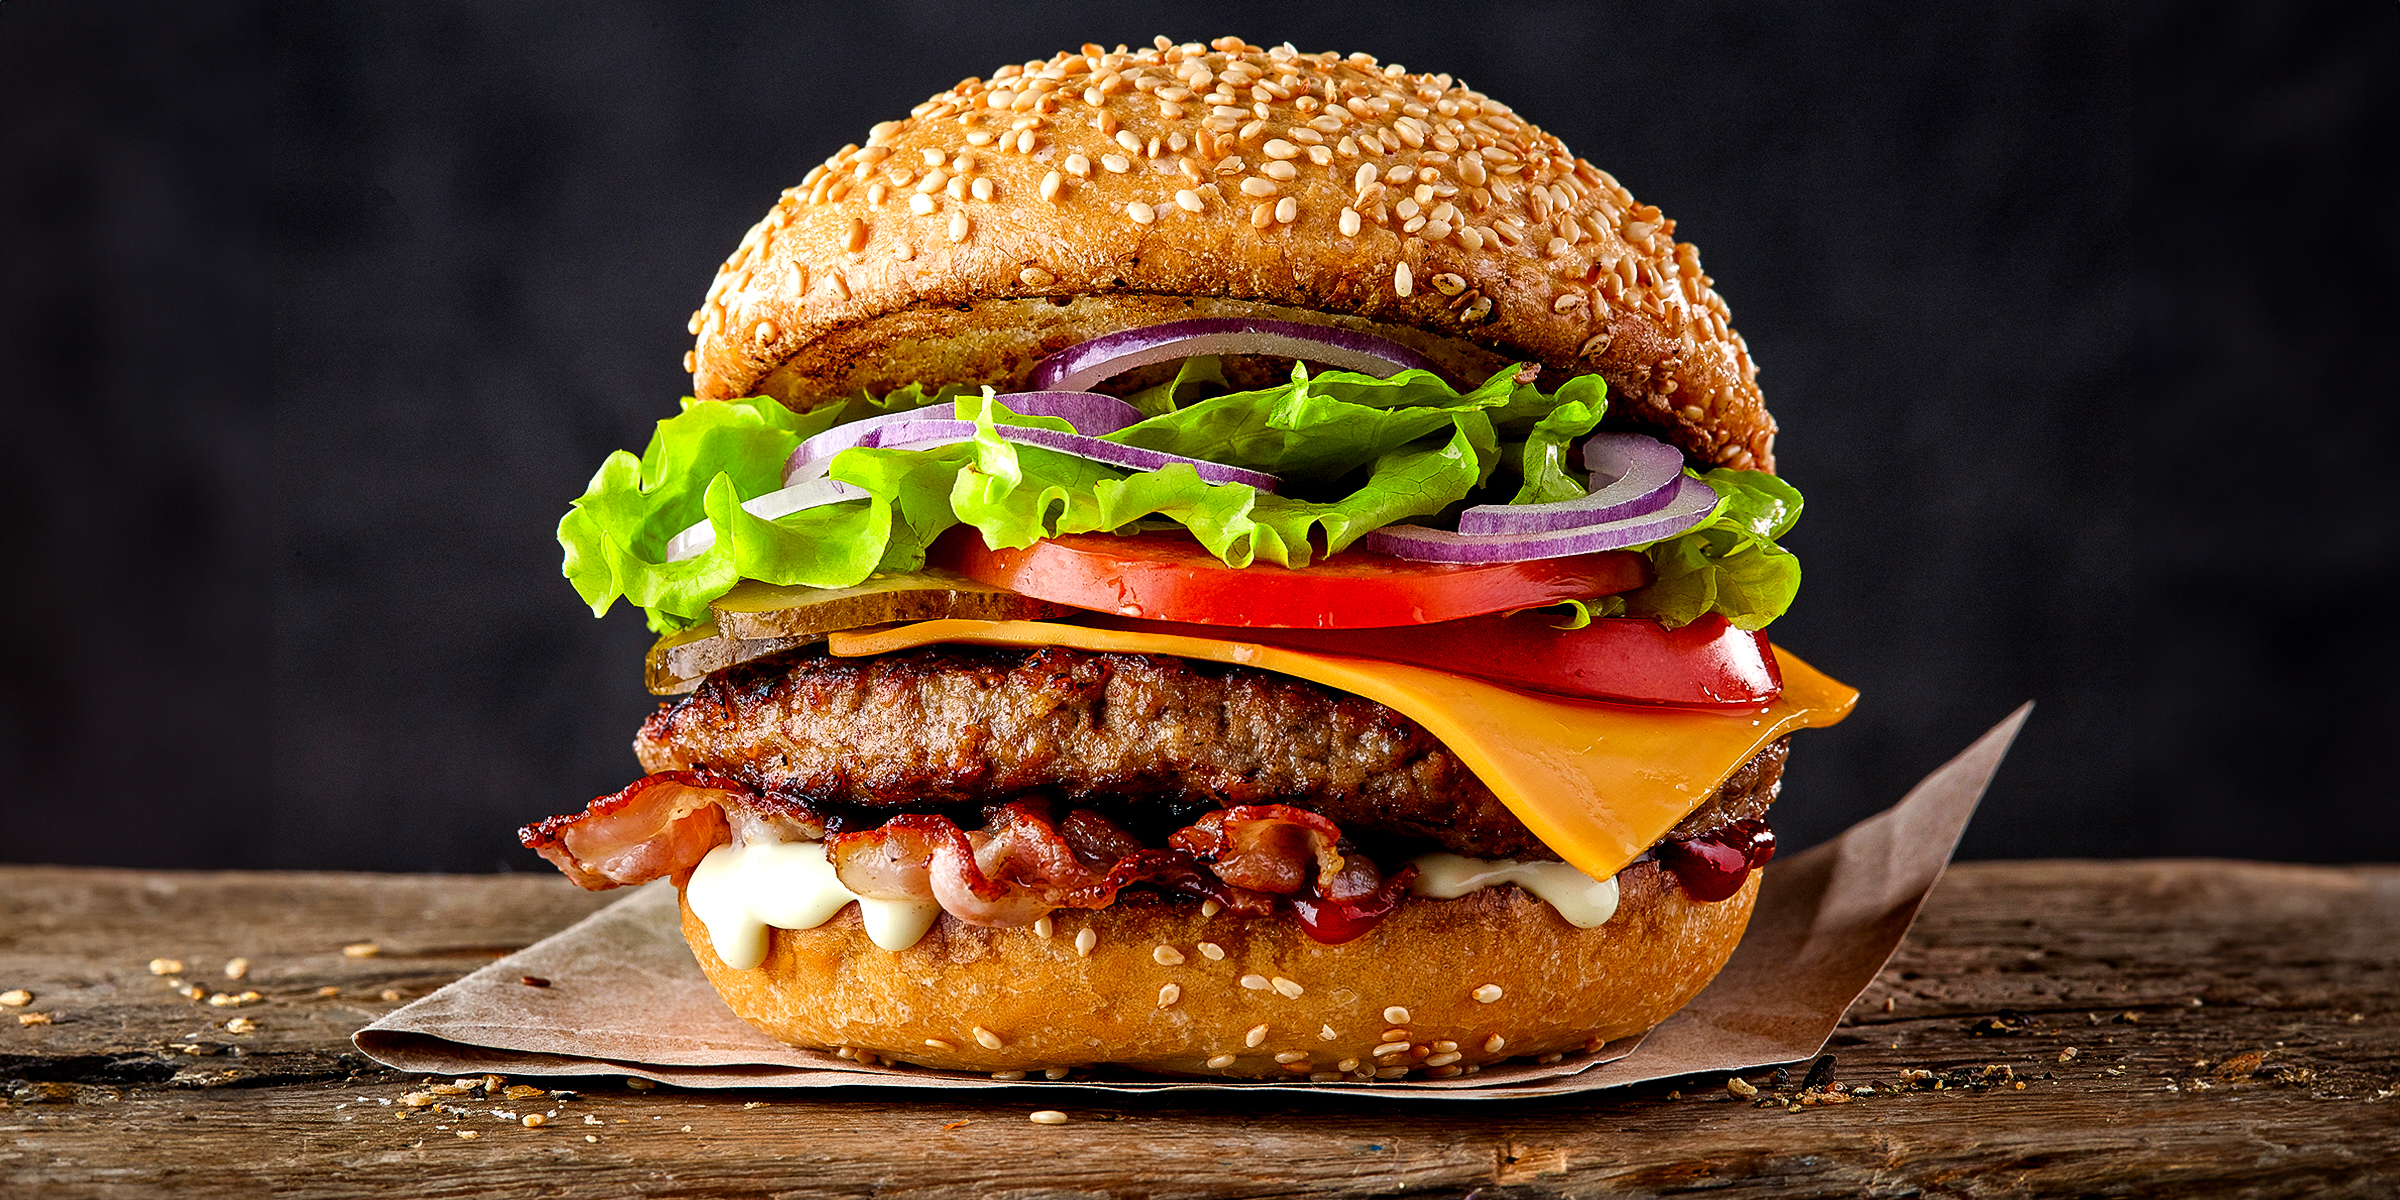 The Jesse Kelly Burger | Source: Shutterstock